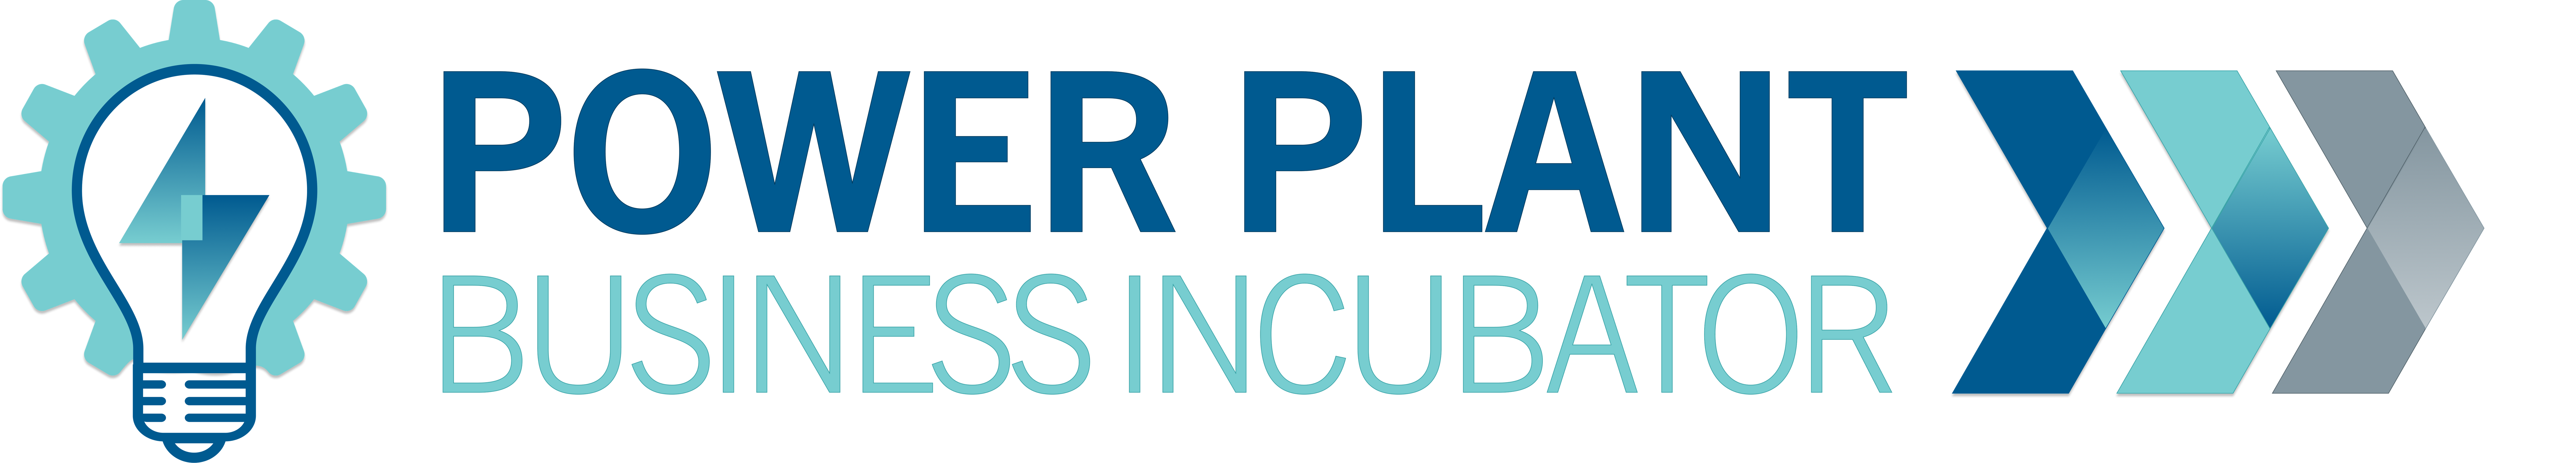 Power Plant Business Incubator Logo